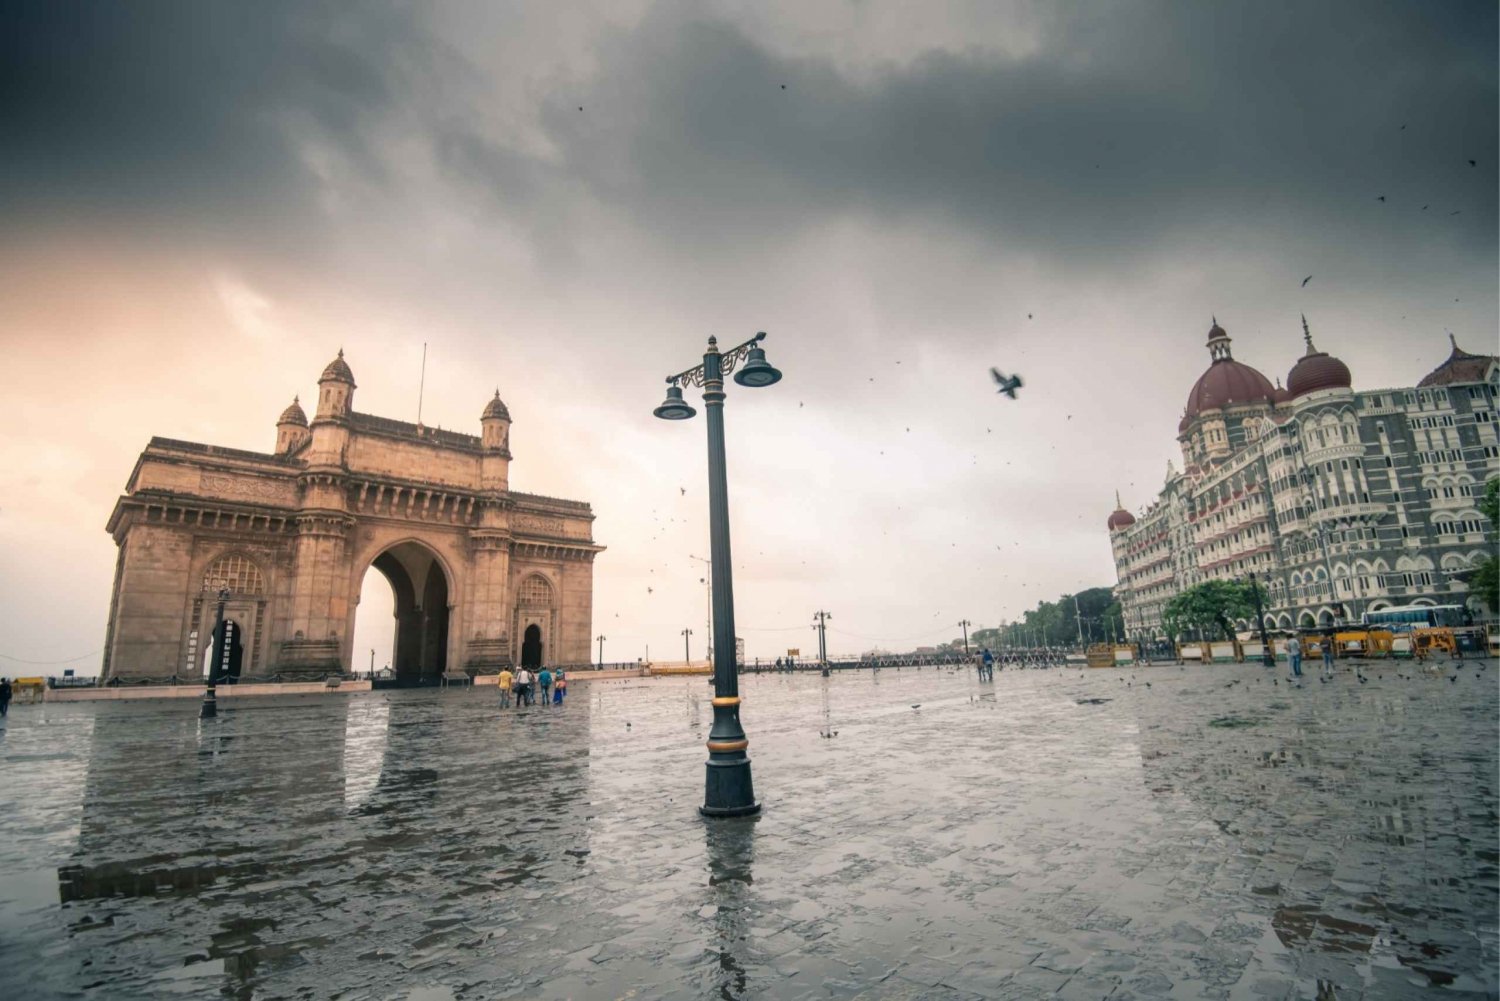 'Best of Mumbai (Guided Full Day Sightseeing City Tour)'